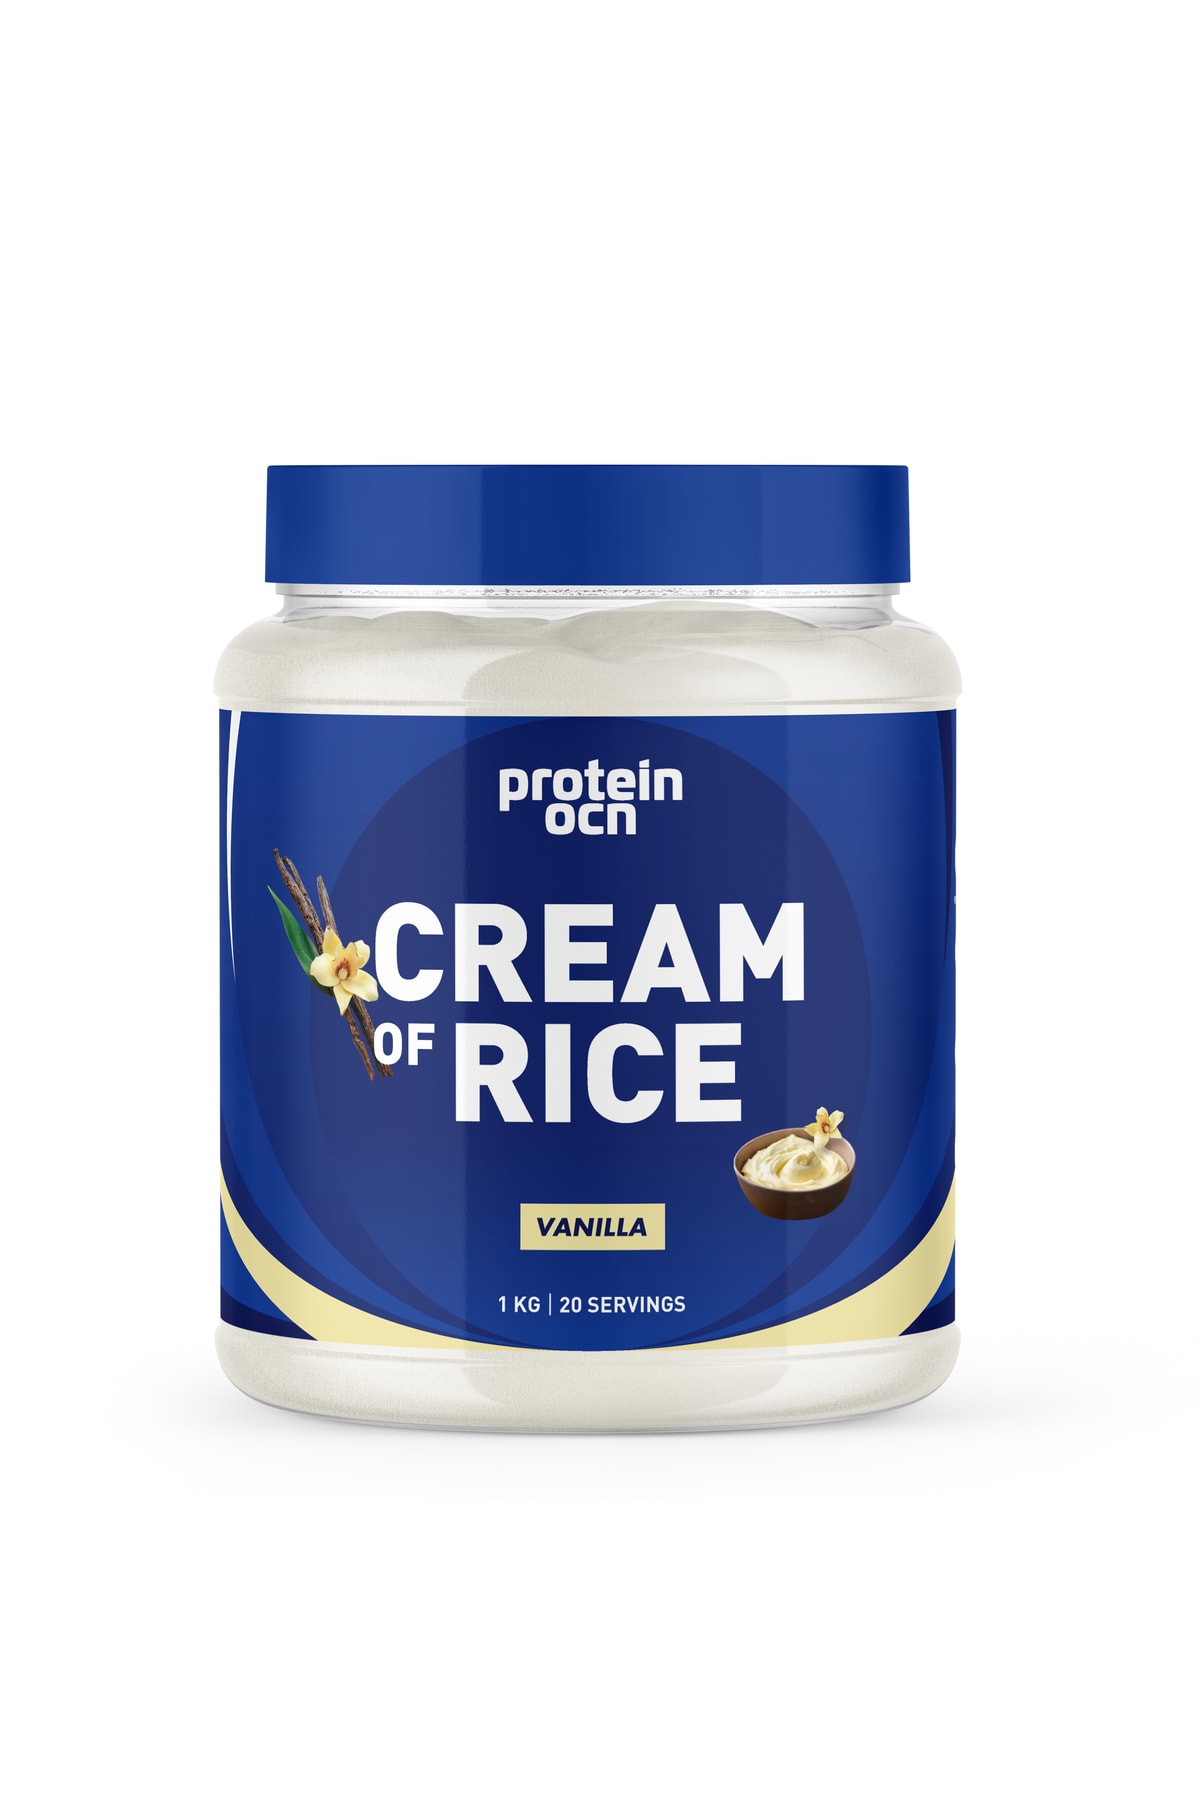 Proteinocean Cream Of Rice - Vanilya - 1kg - 20 Servis